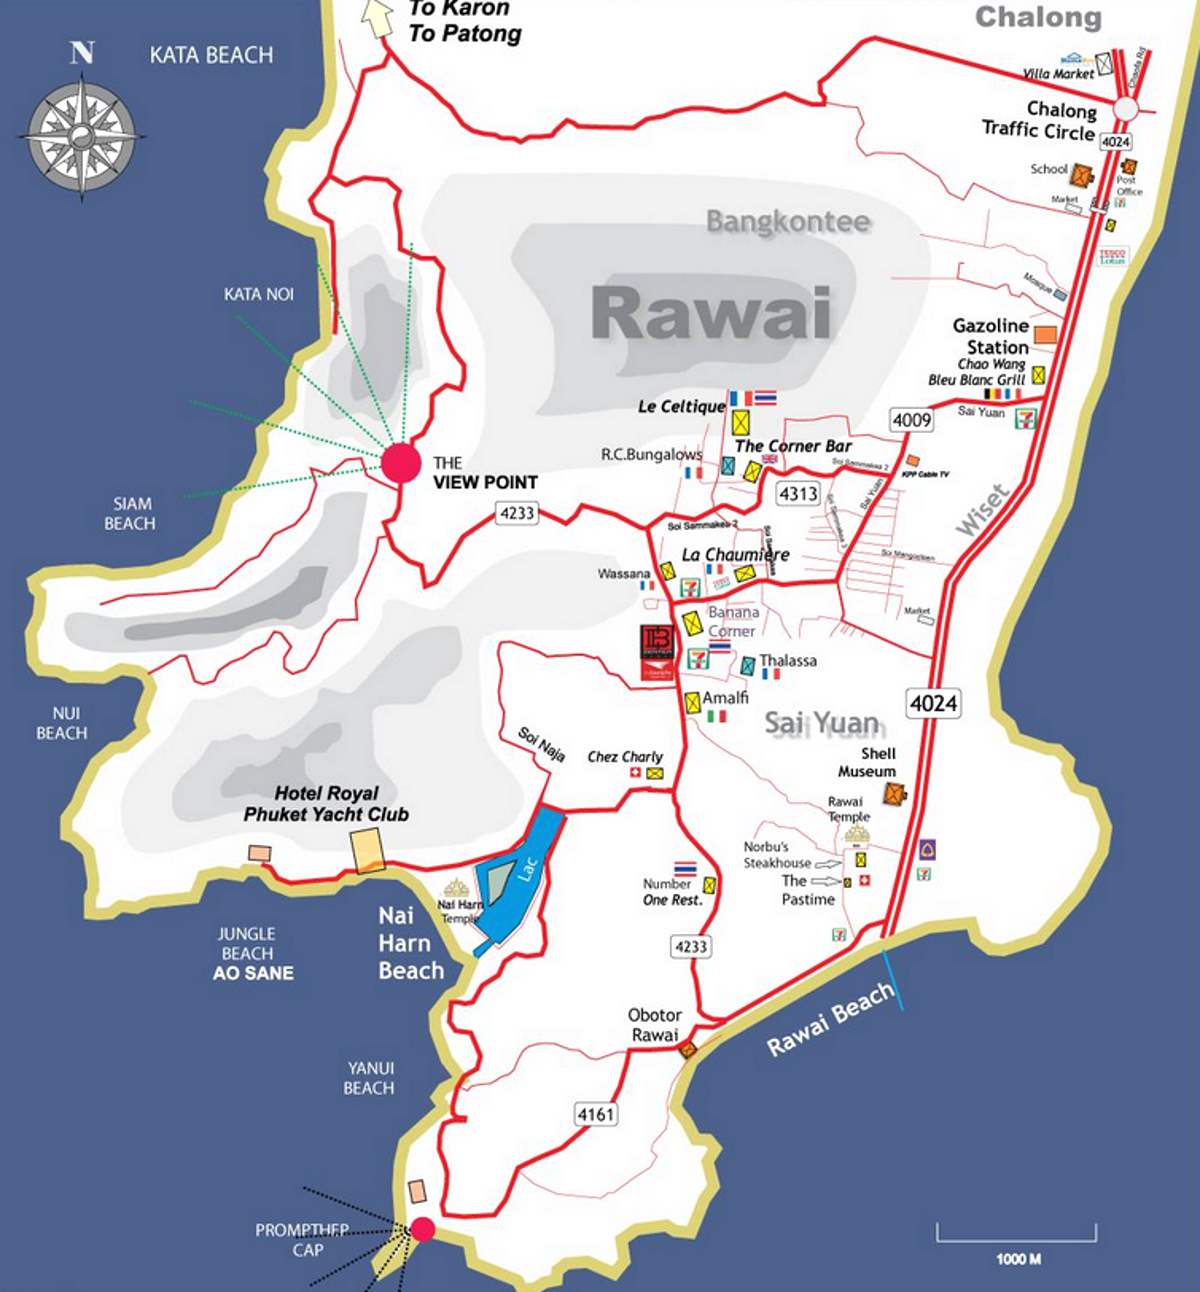 Rawai on the map of Phuket Island